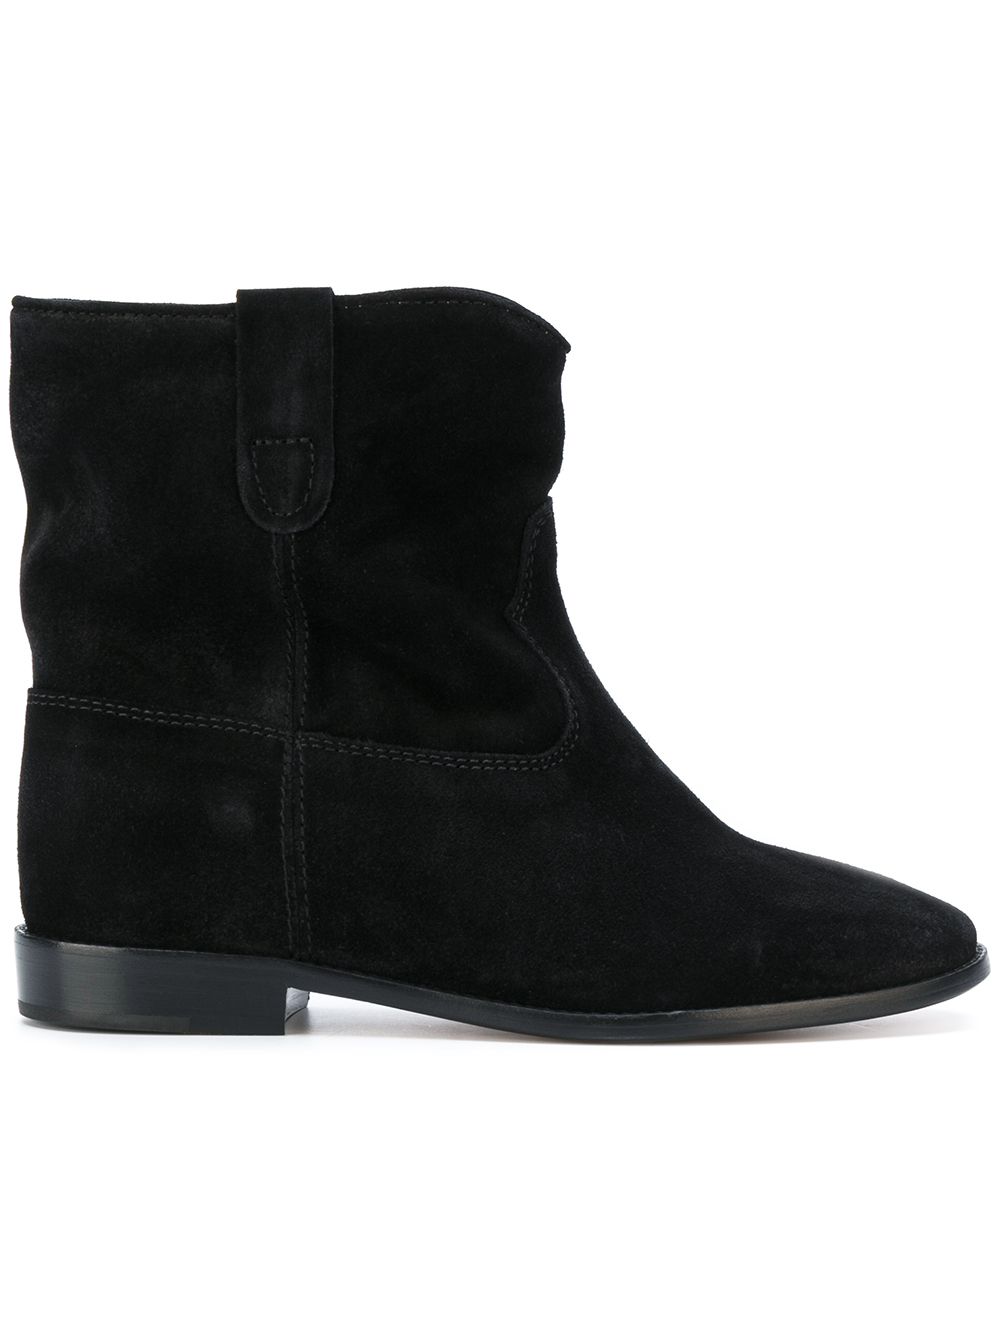 Crisi Leather Ankle Boots дамски обувки Isabel Marant 843159048_35